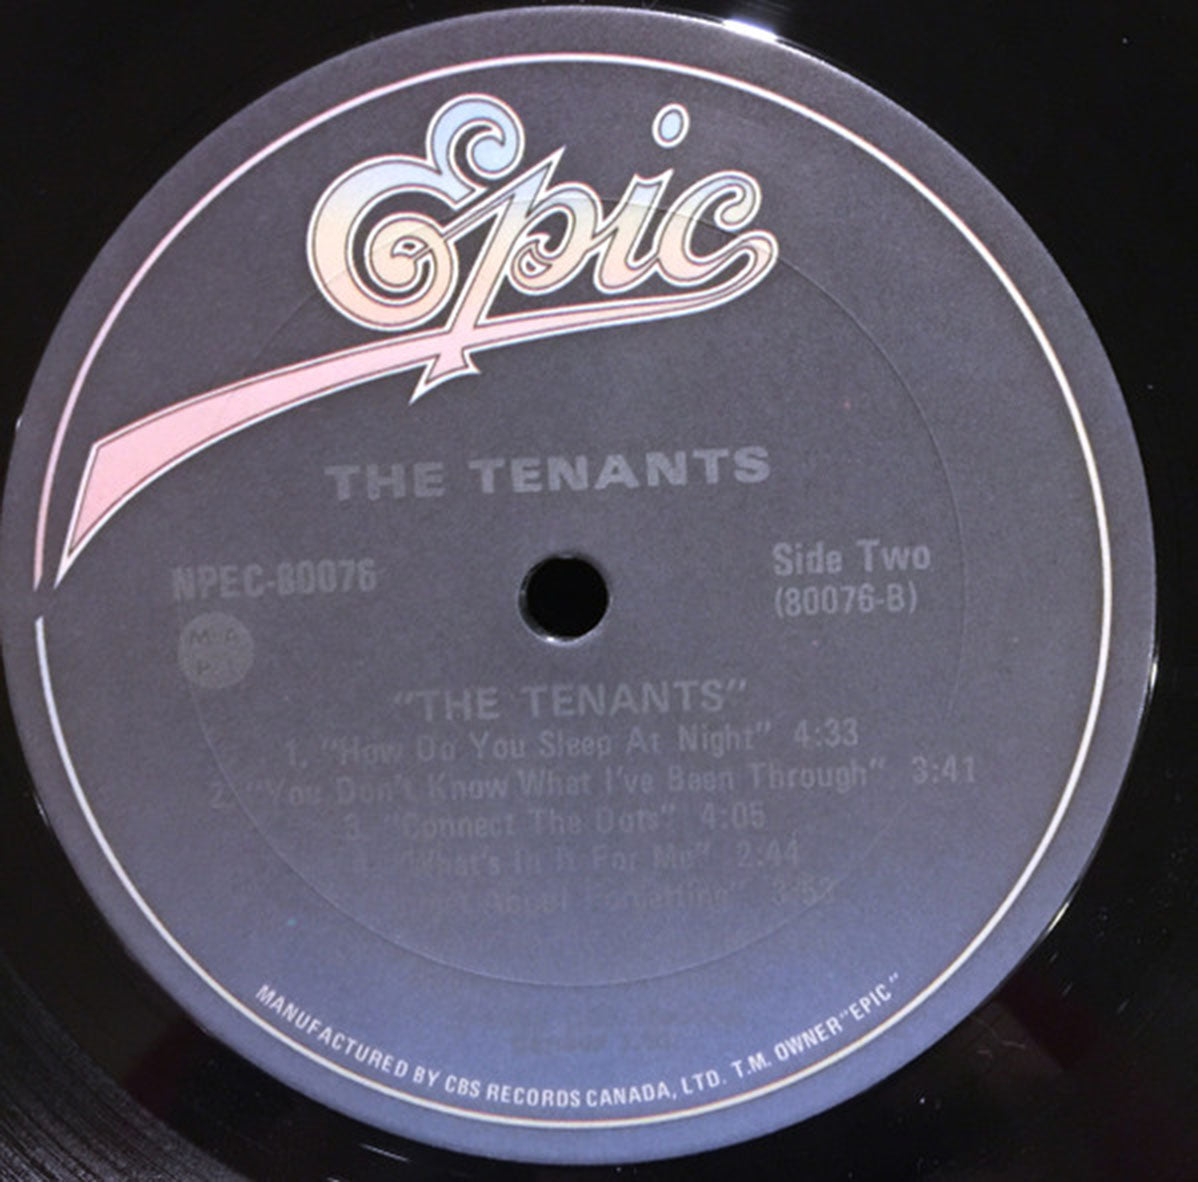 The Tenants – The Tenants